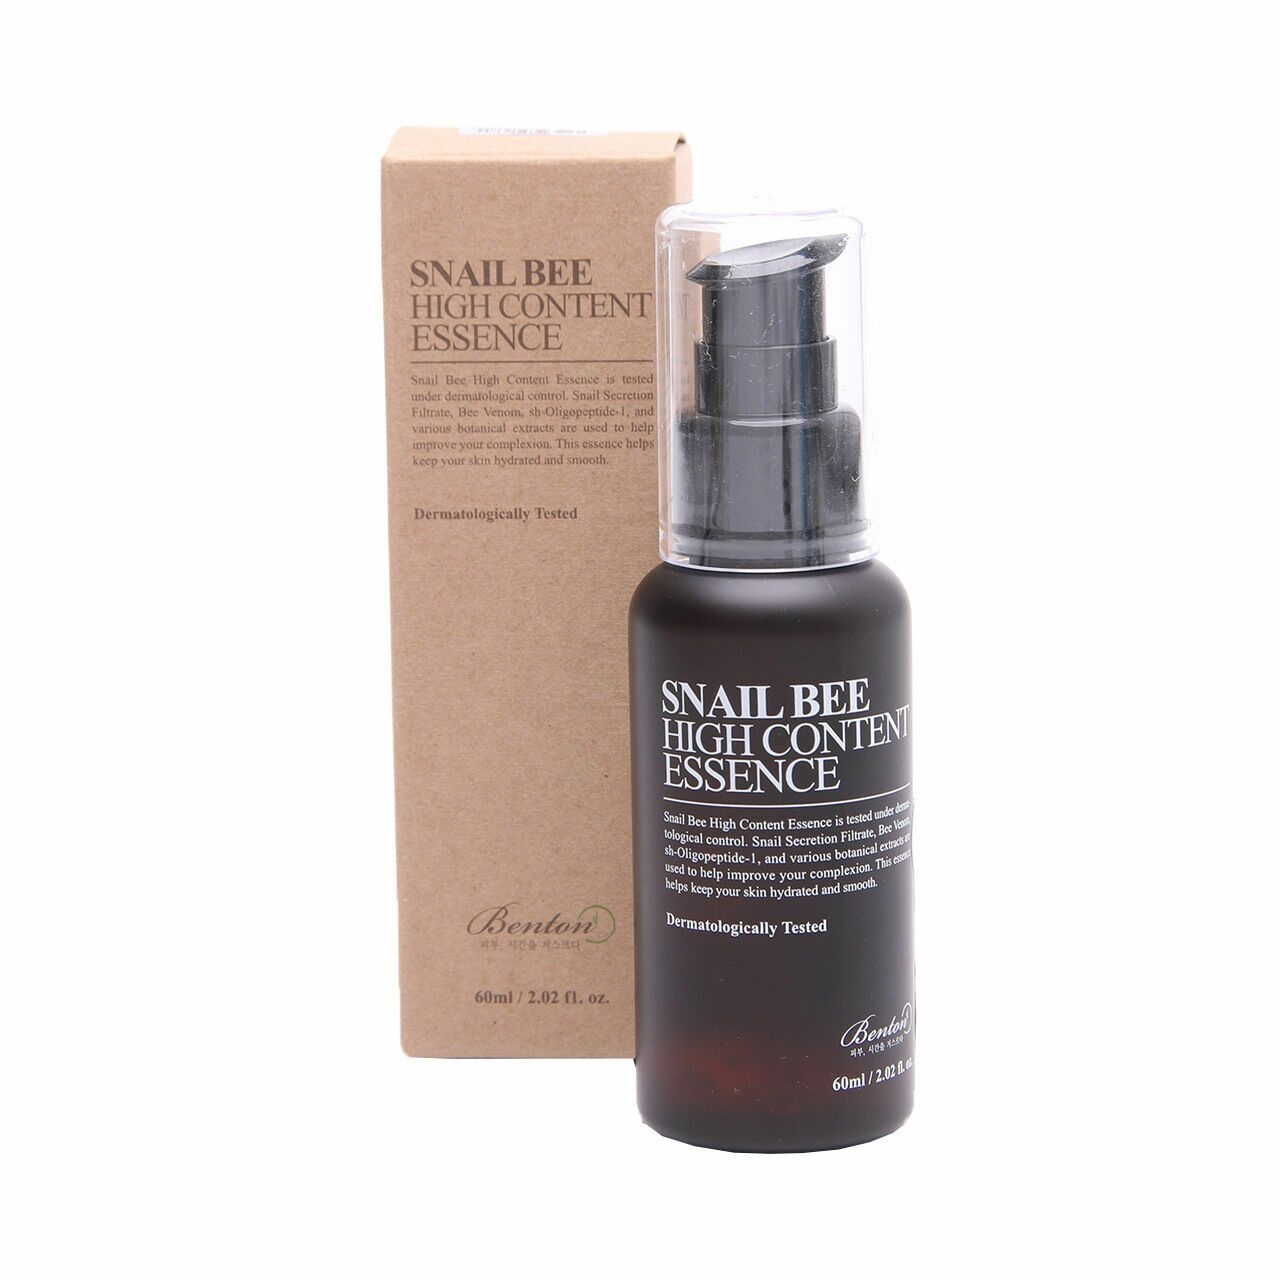 Benton Snail Bee High Content Essence Skin Care